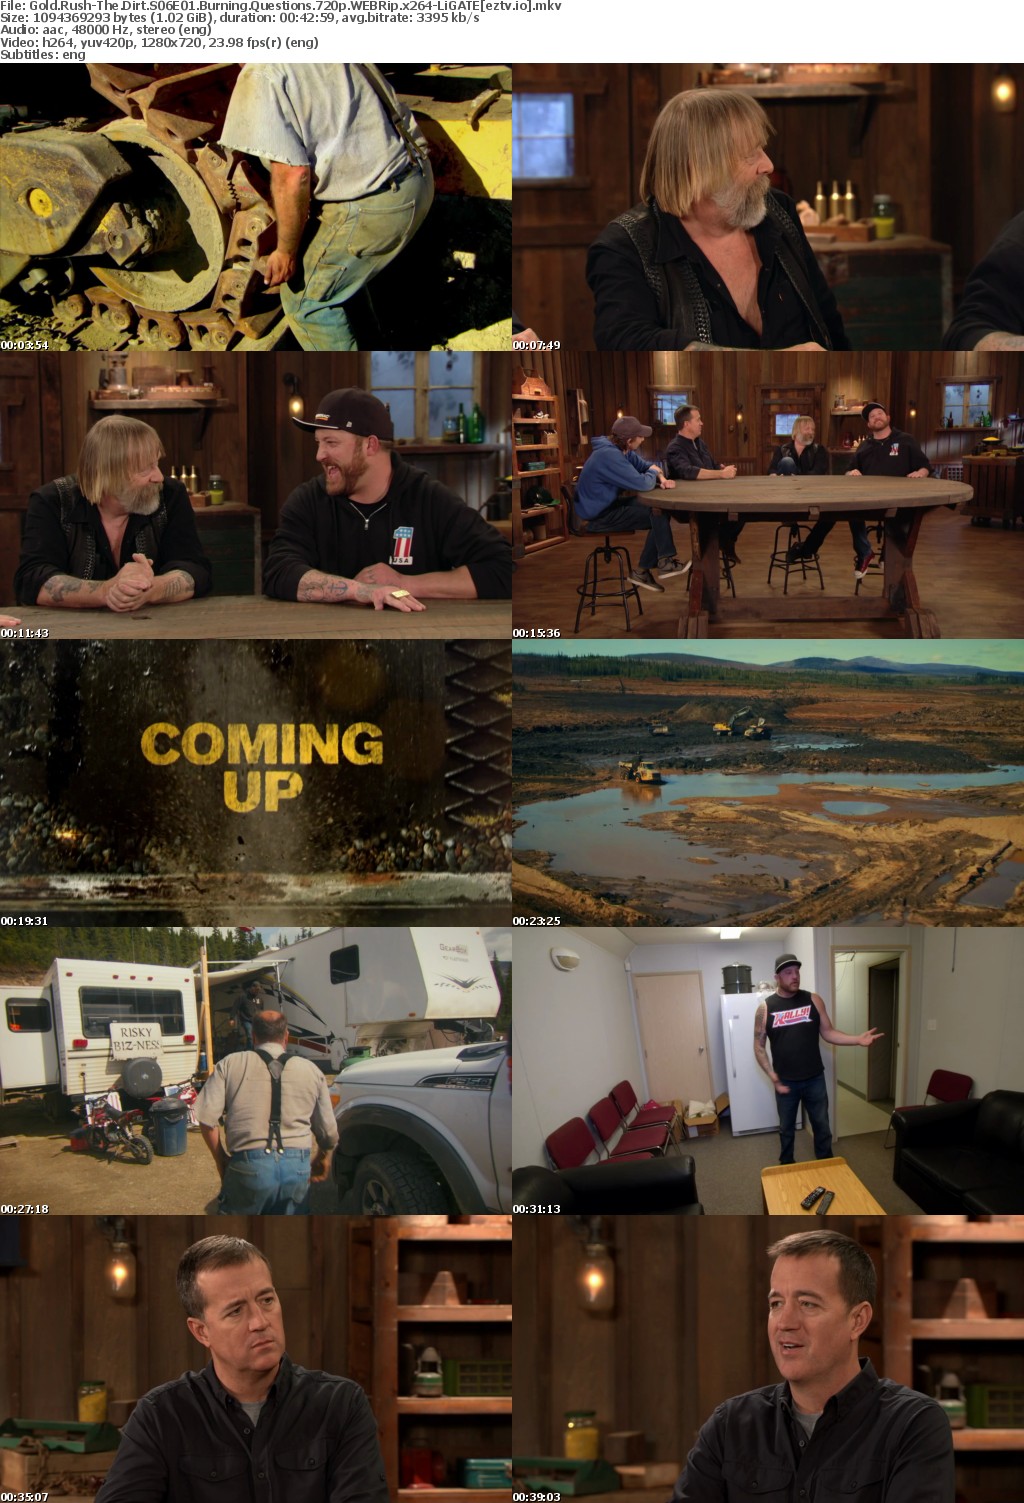 Gold Rush-The Dirt S06E01 Burning Questions 720p WEBRip x264-LiGATE